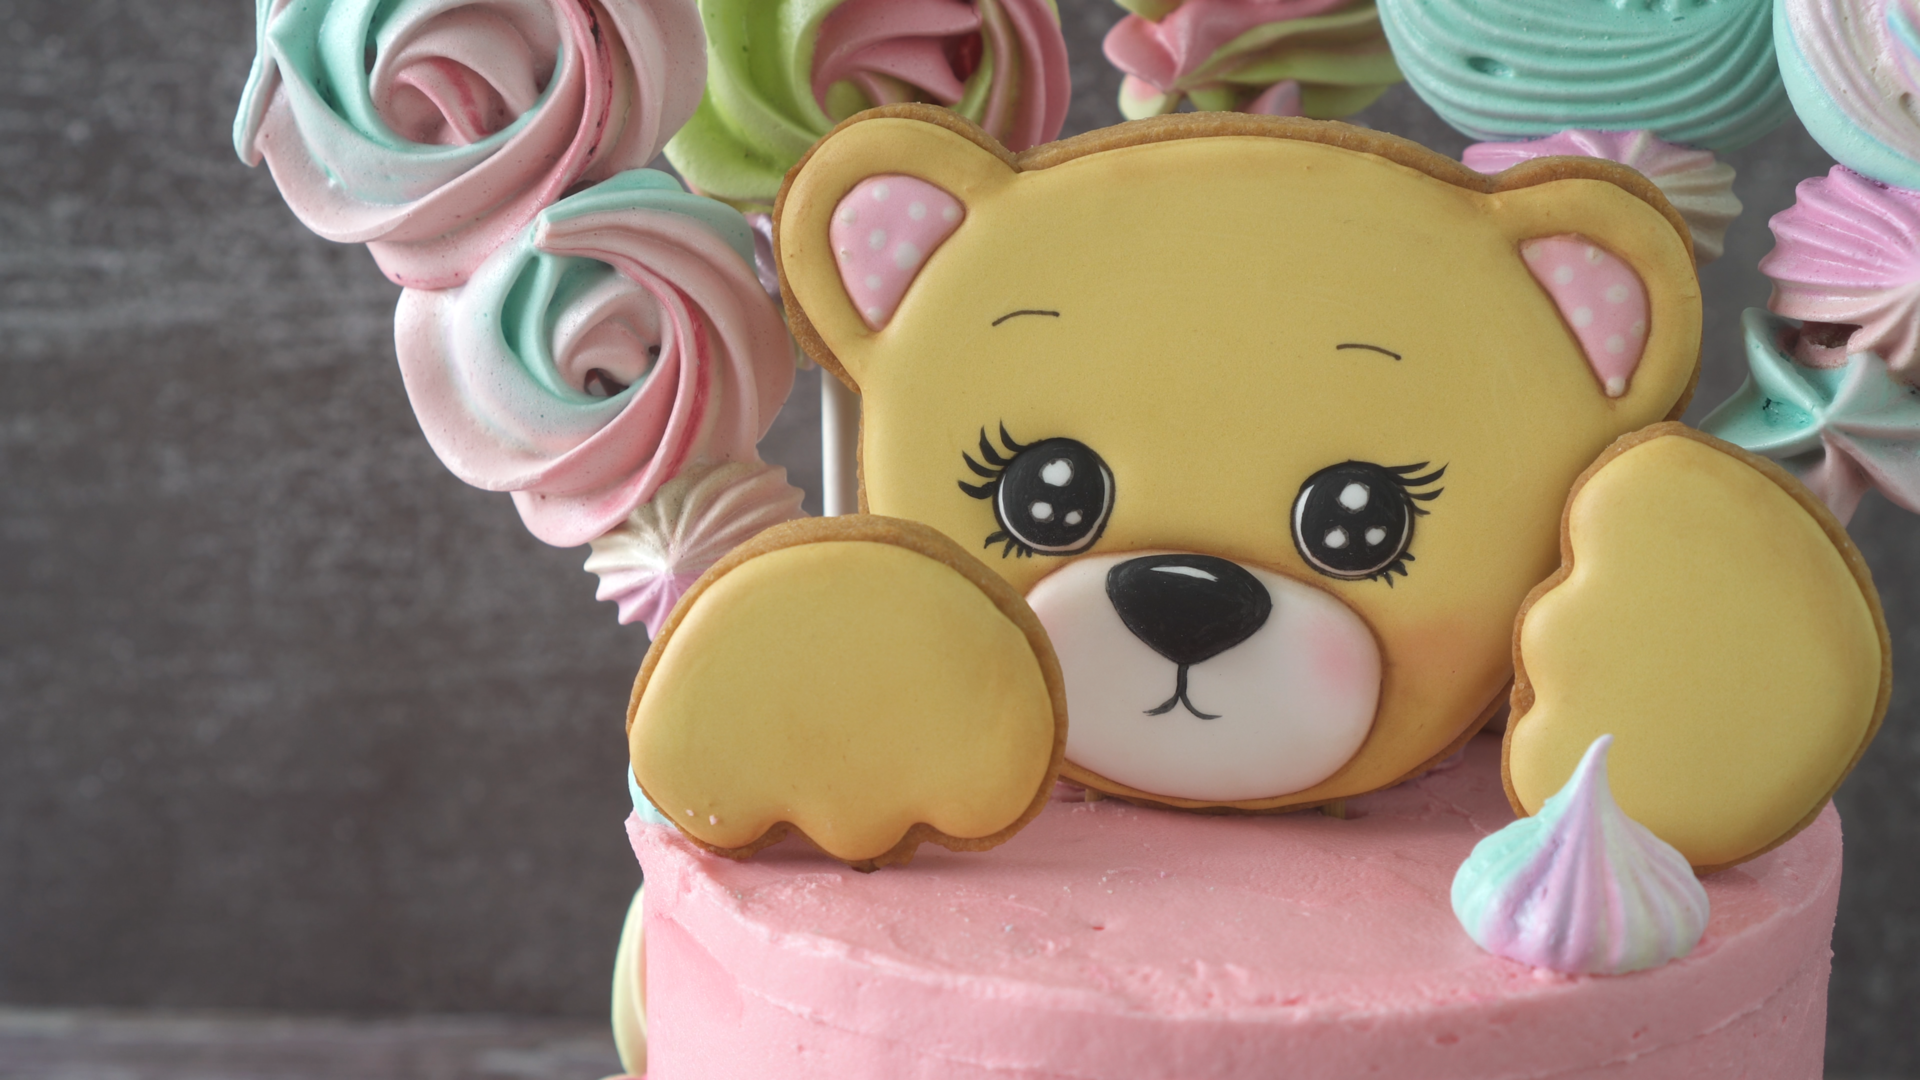 My Teddy Bear Base On The Tutorial From Bake A Boo - CakeCentral.com